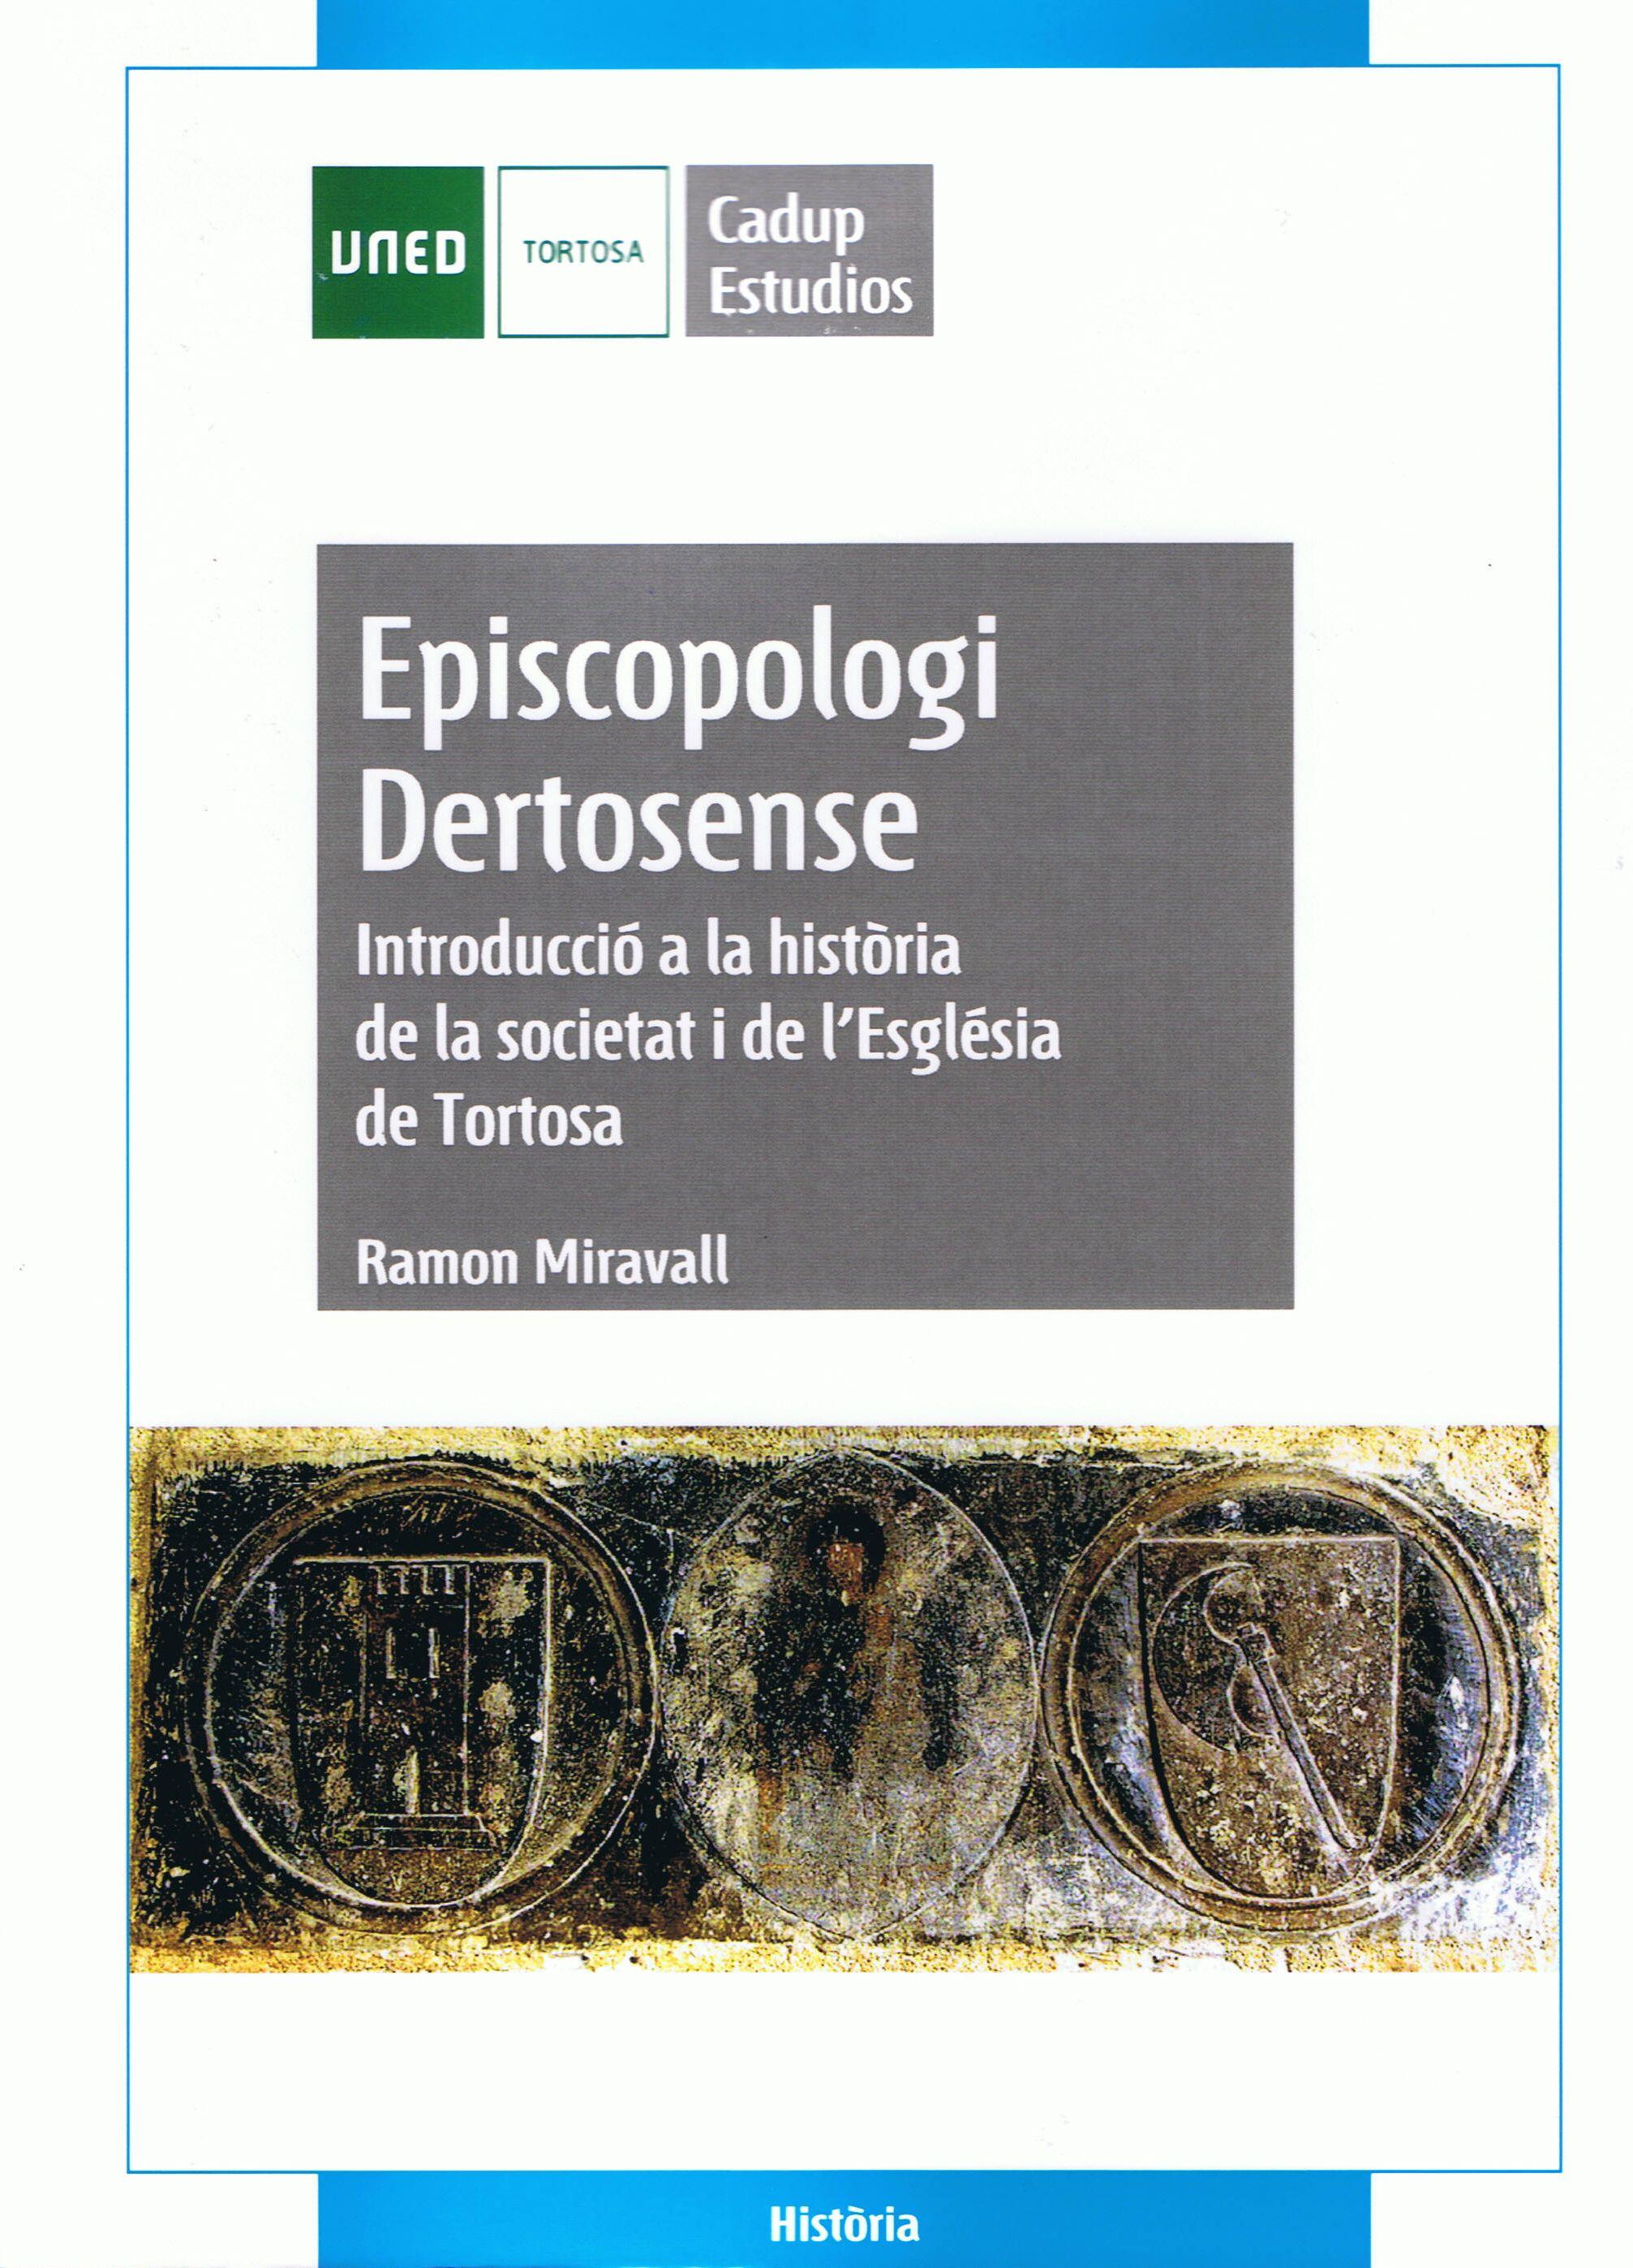 Episcopologi Dertosense. Ramon Miravall